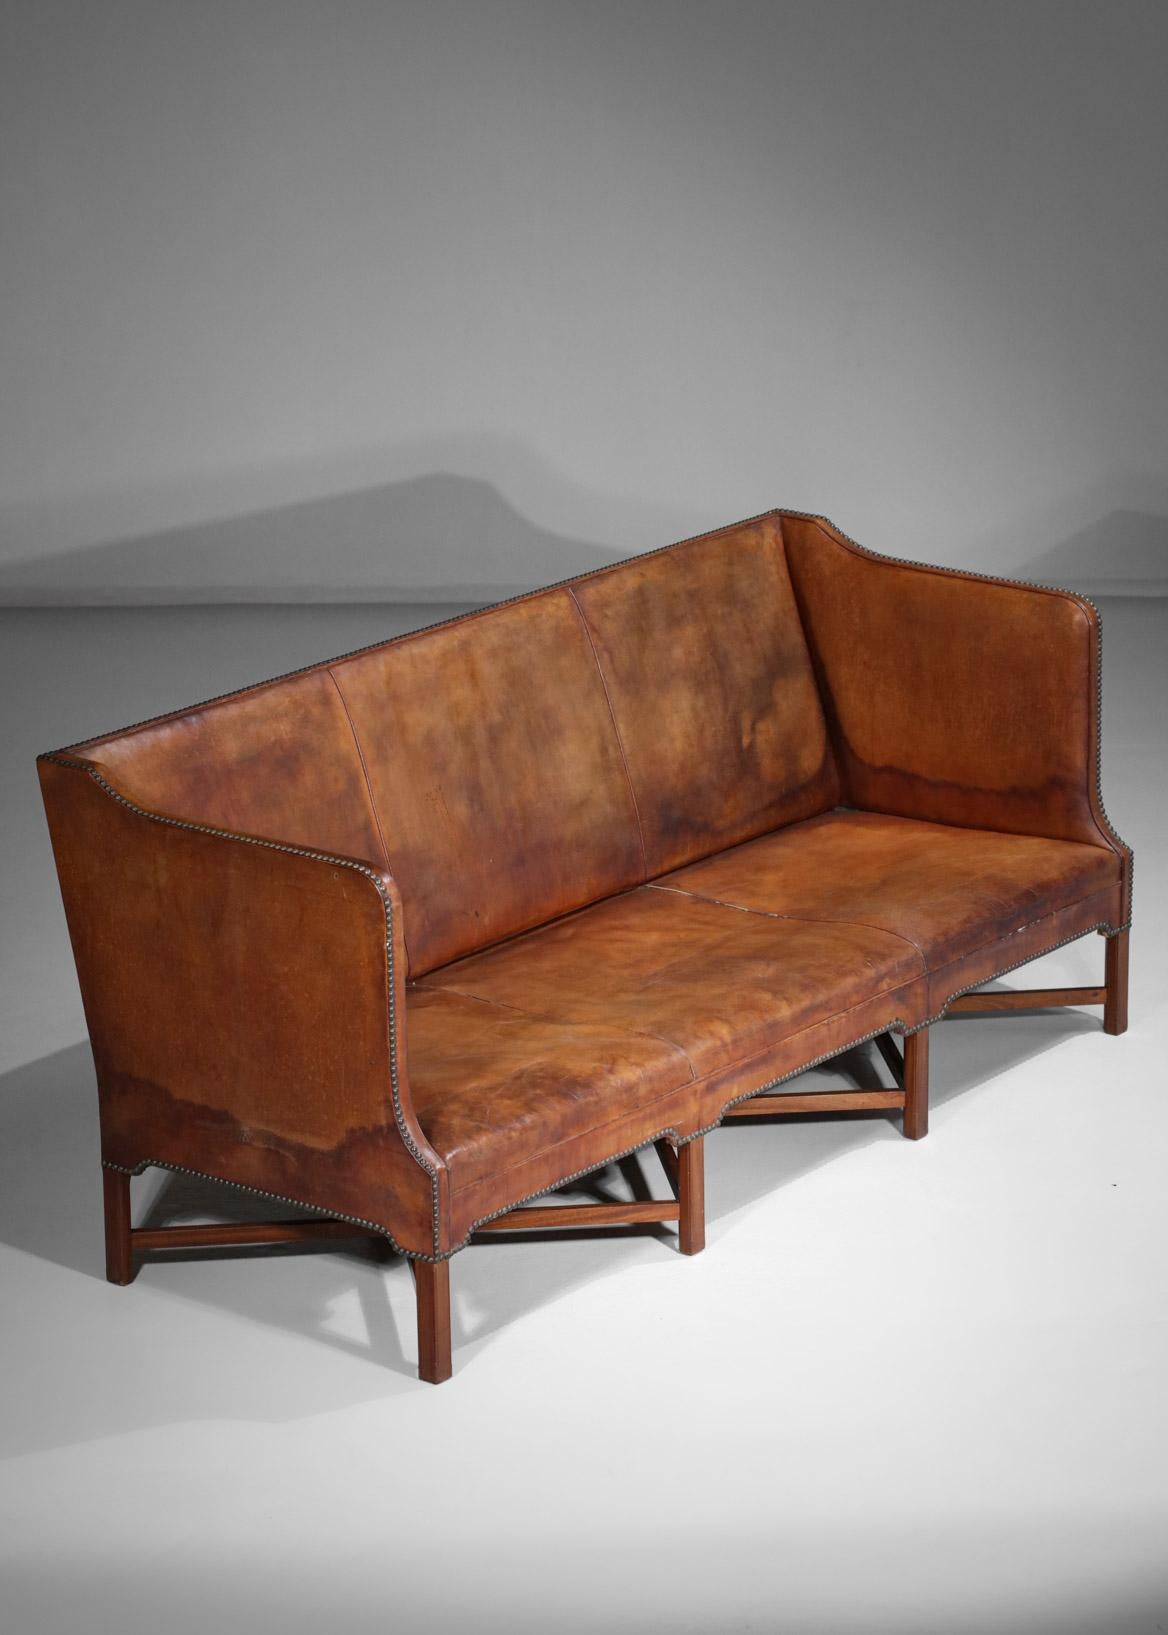 Rare Scandinavian three seat sofa by Danish designer Kaare Klint for Rud Rasmussen. Model 